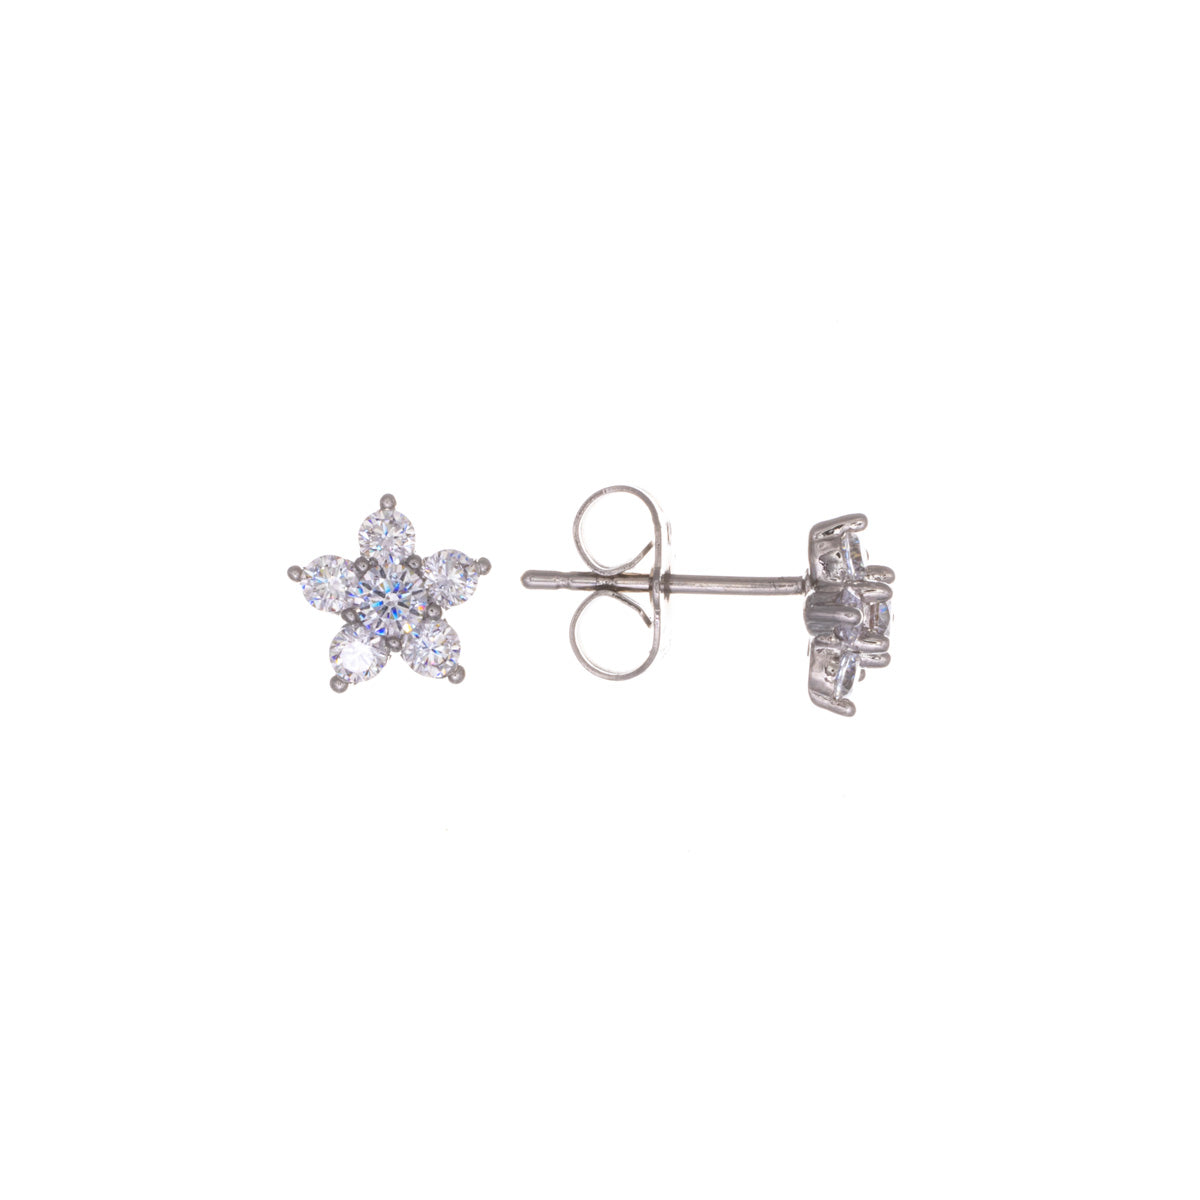 Star earrings with zirconia stones